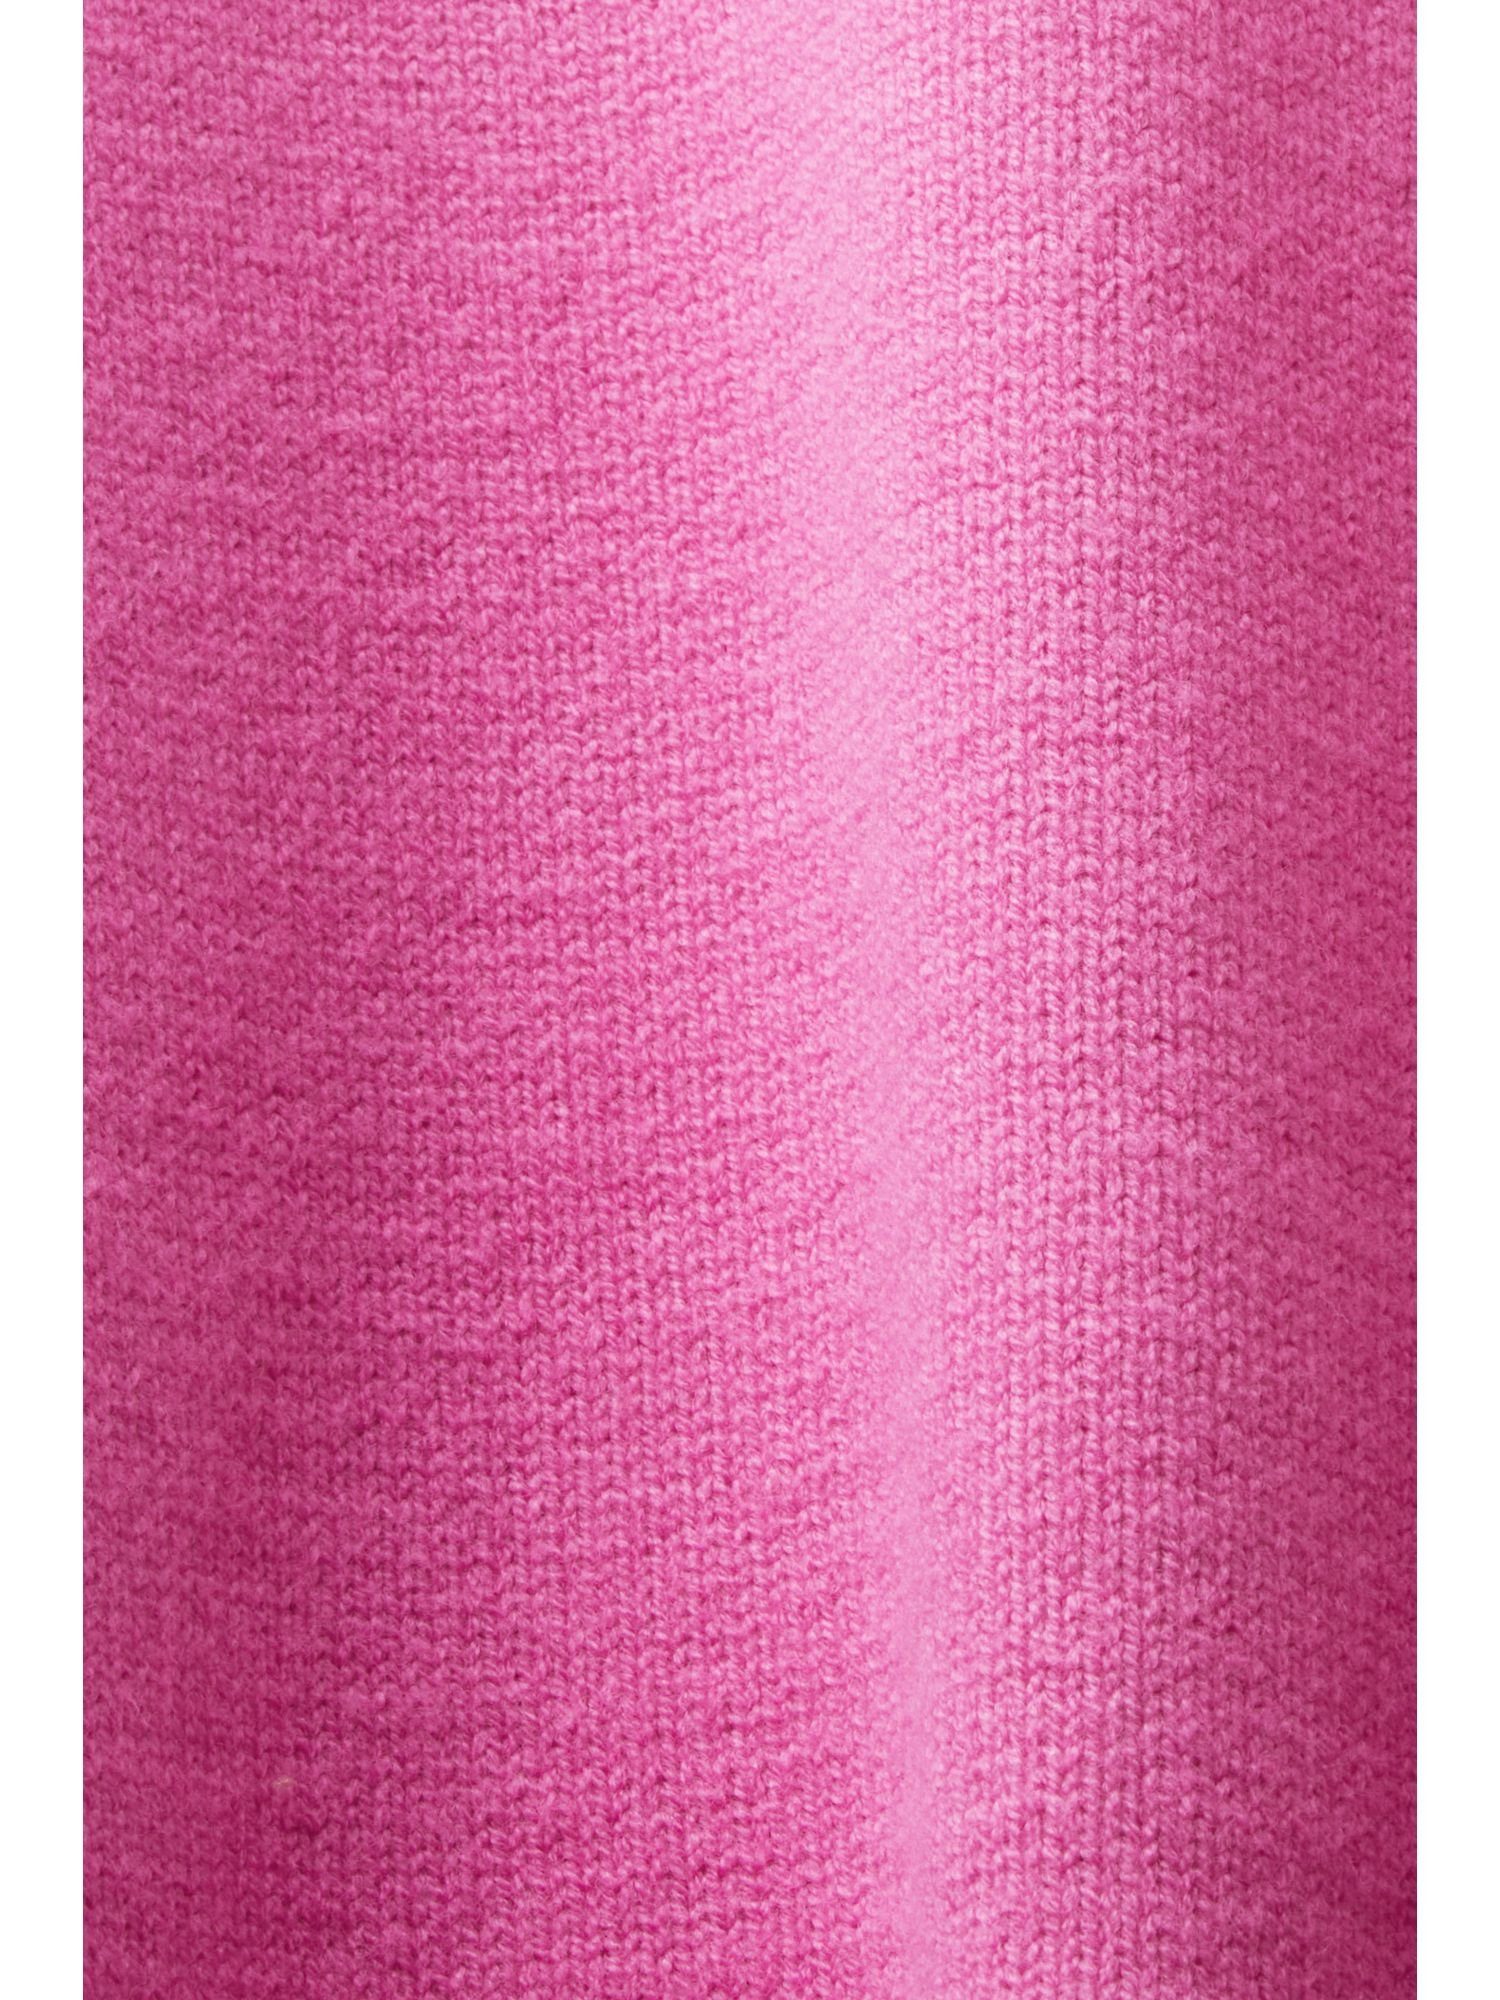 FUCHSIA Esprit Sweaters Rollkragenpullover PINK